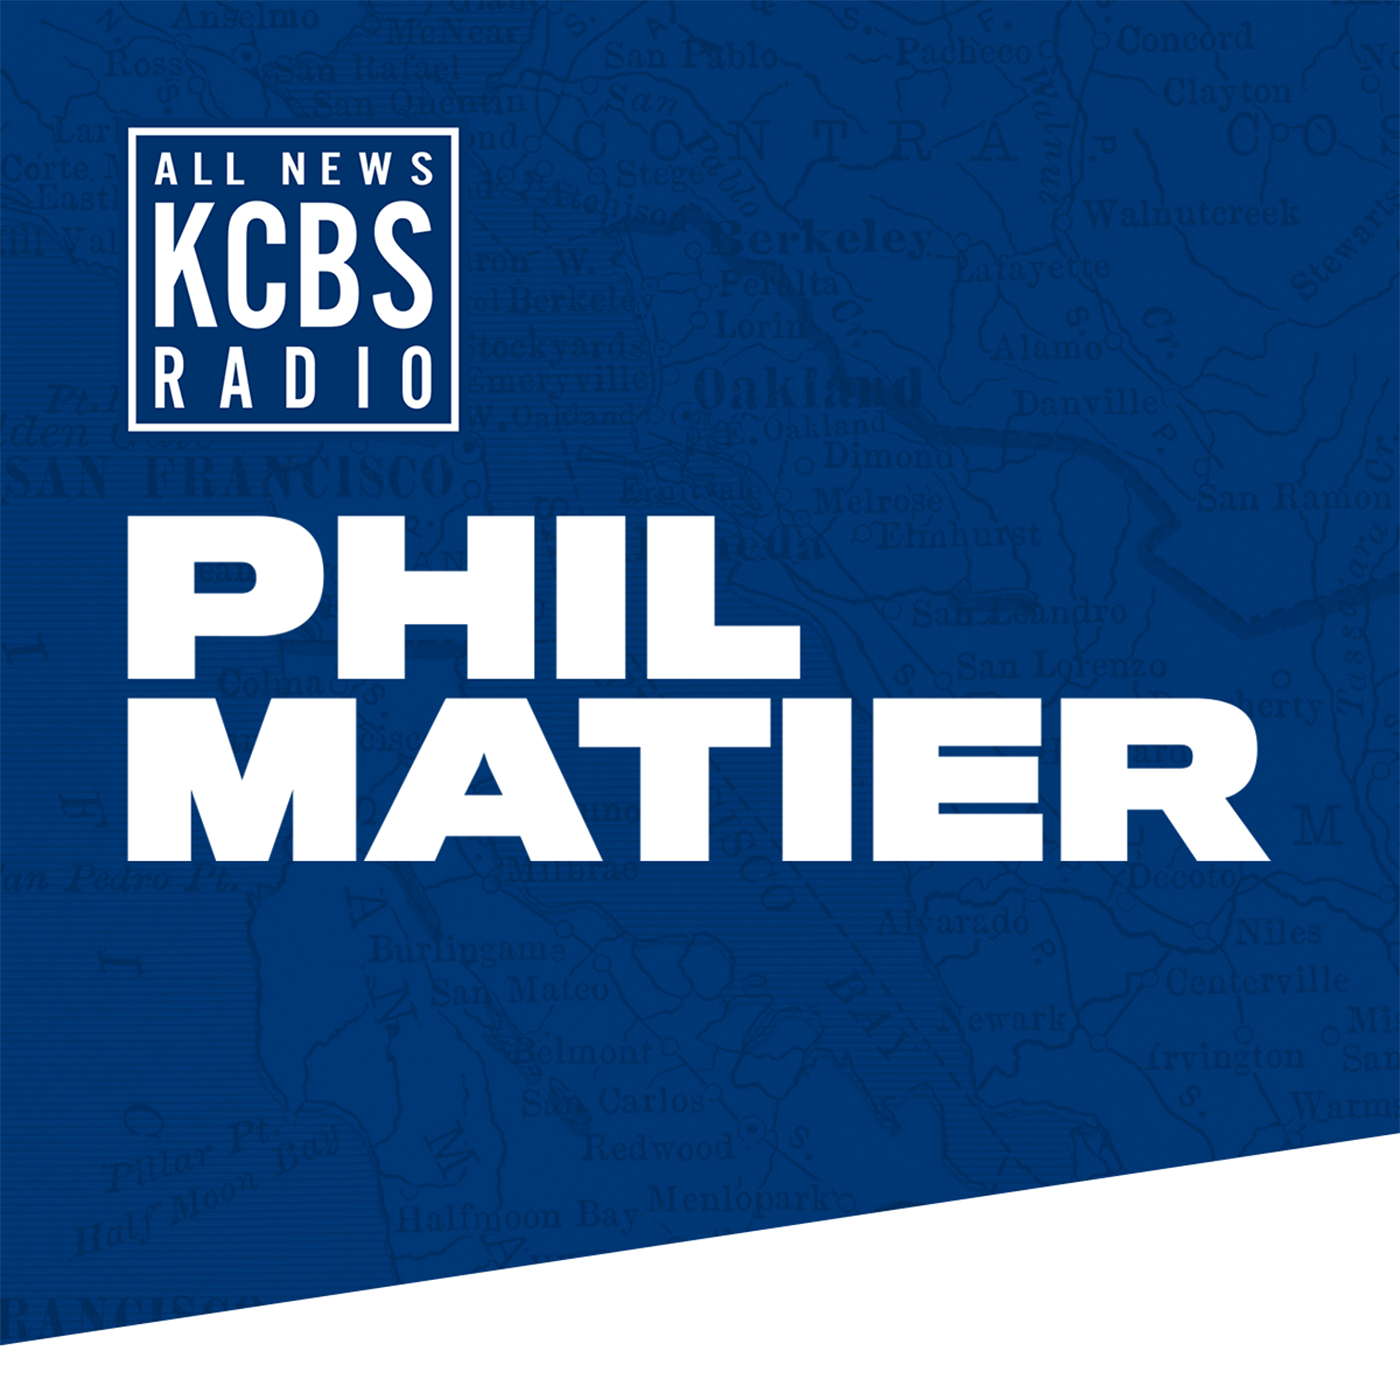 Phil Matier: Will Newsom's fire response help his anti-recall efforts?